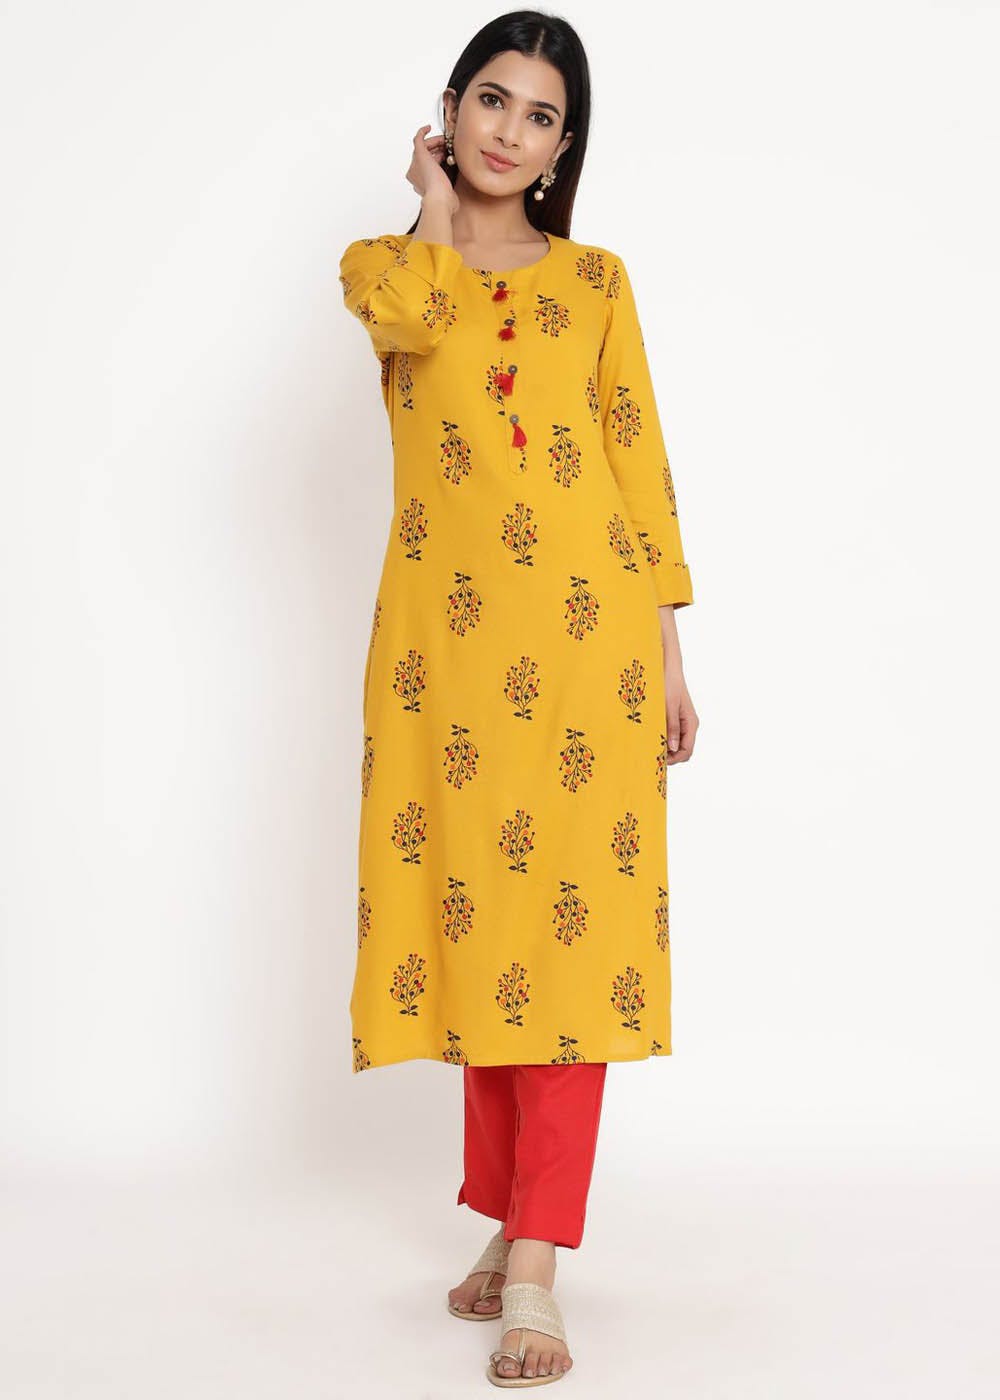 Biba Yellow Kurtas - Buy Biba Yellow Kurtas online in India